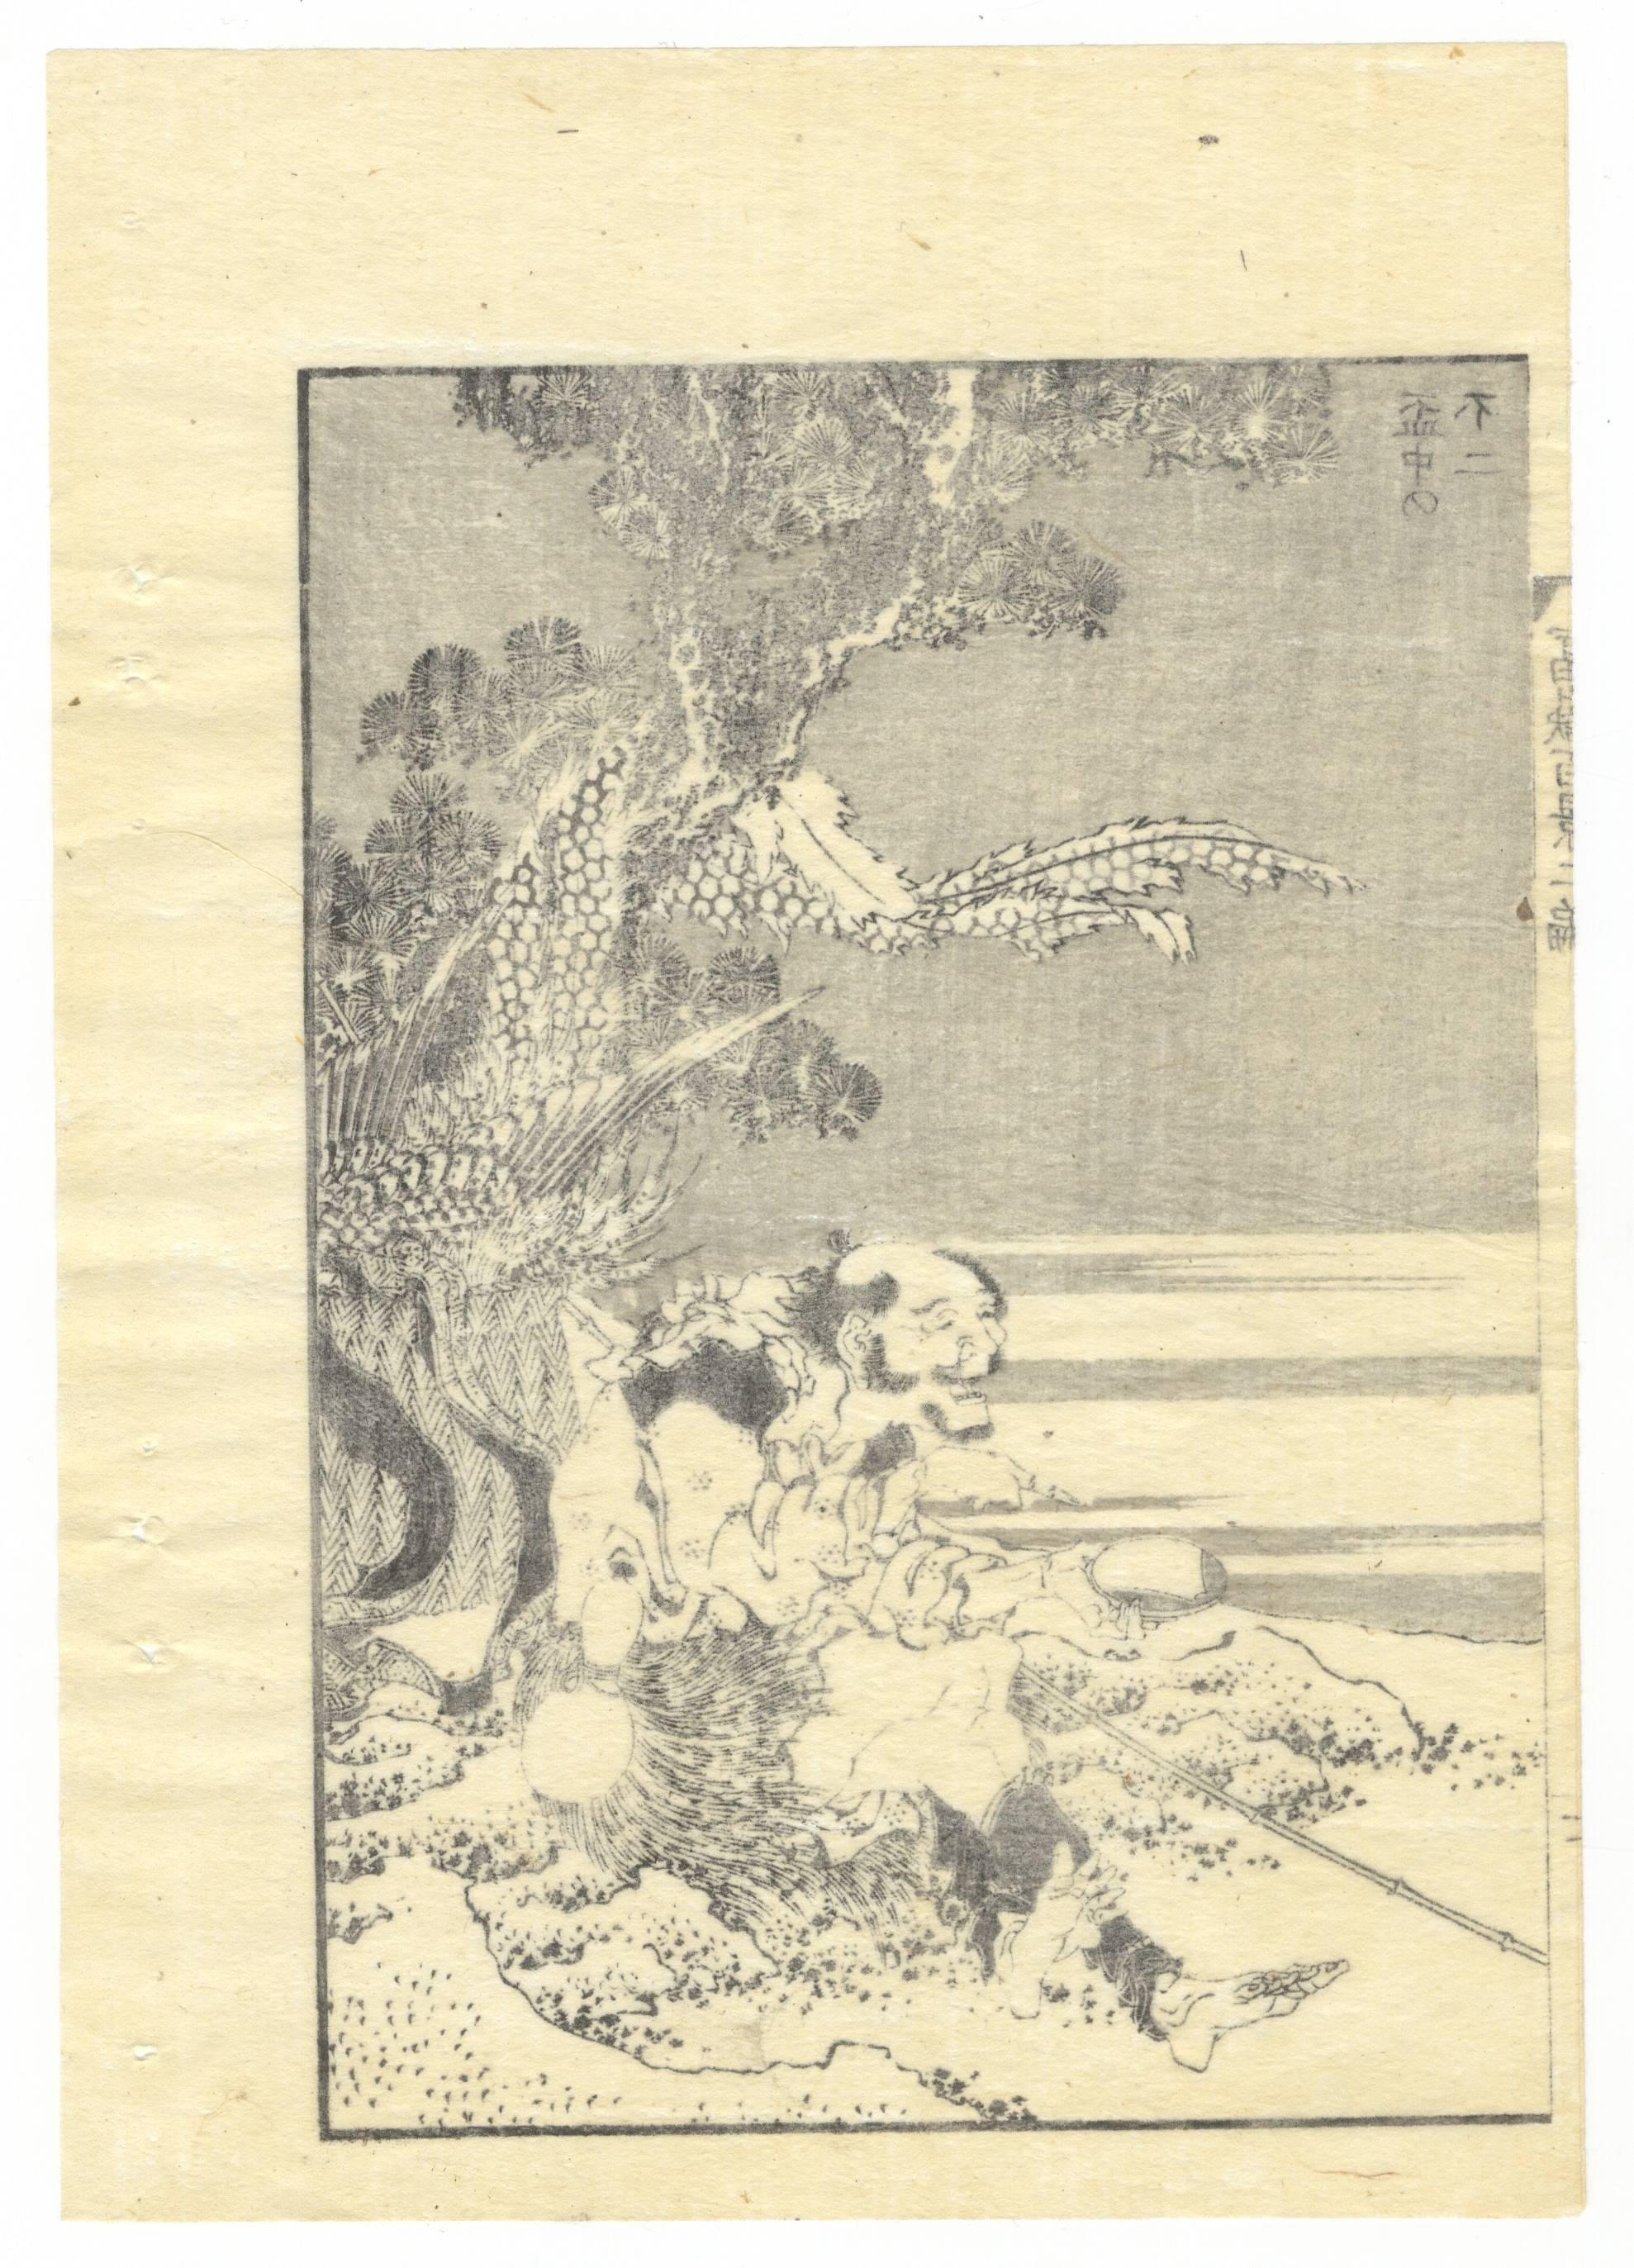 Hand-printed on traditional Japanese washi paper (mulberry tree paper).

Artist: Katsushika Hokusai
Title: Fuji inside the saké cup
Series: 100 Views of Mt Fuji, volume 2
Publisher: Toheki-do Eirakuya Toshiro
Published: 1835-1880

This print is from